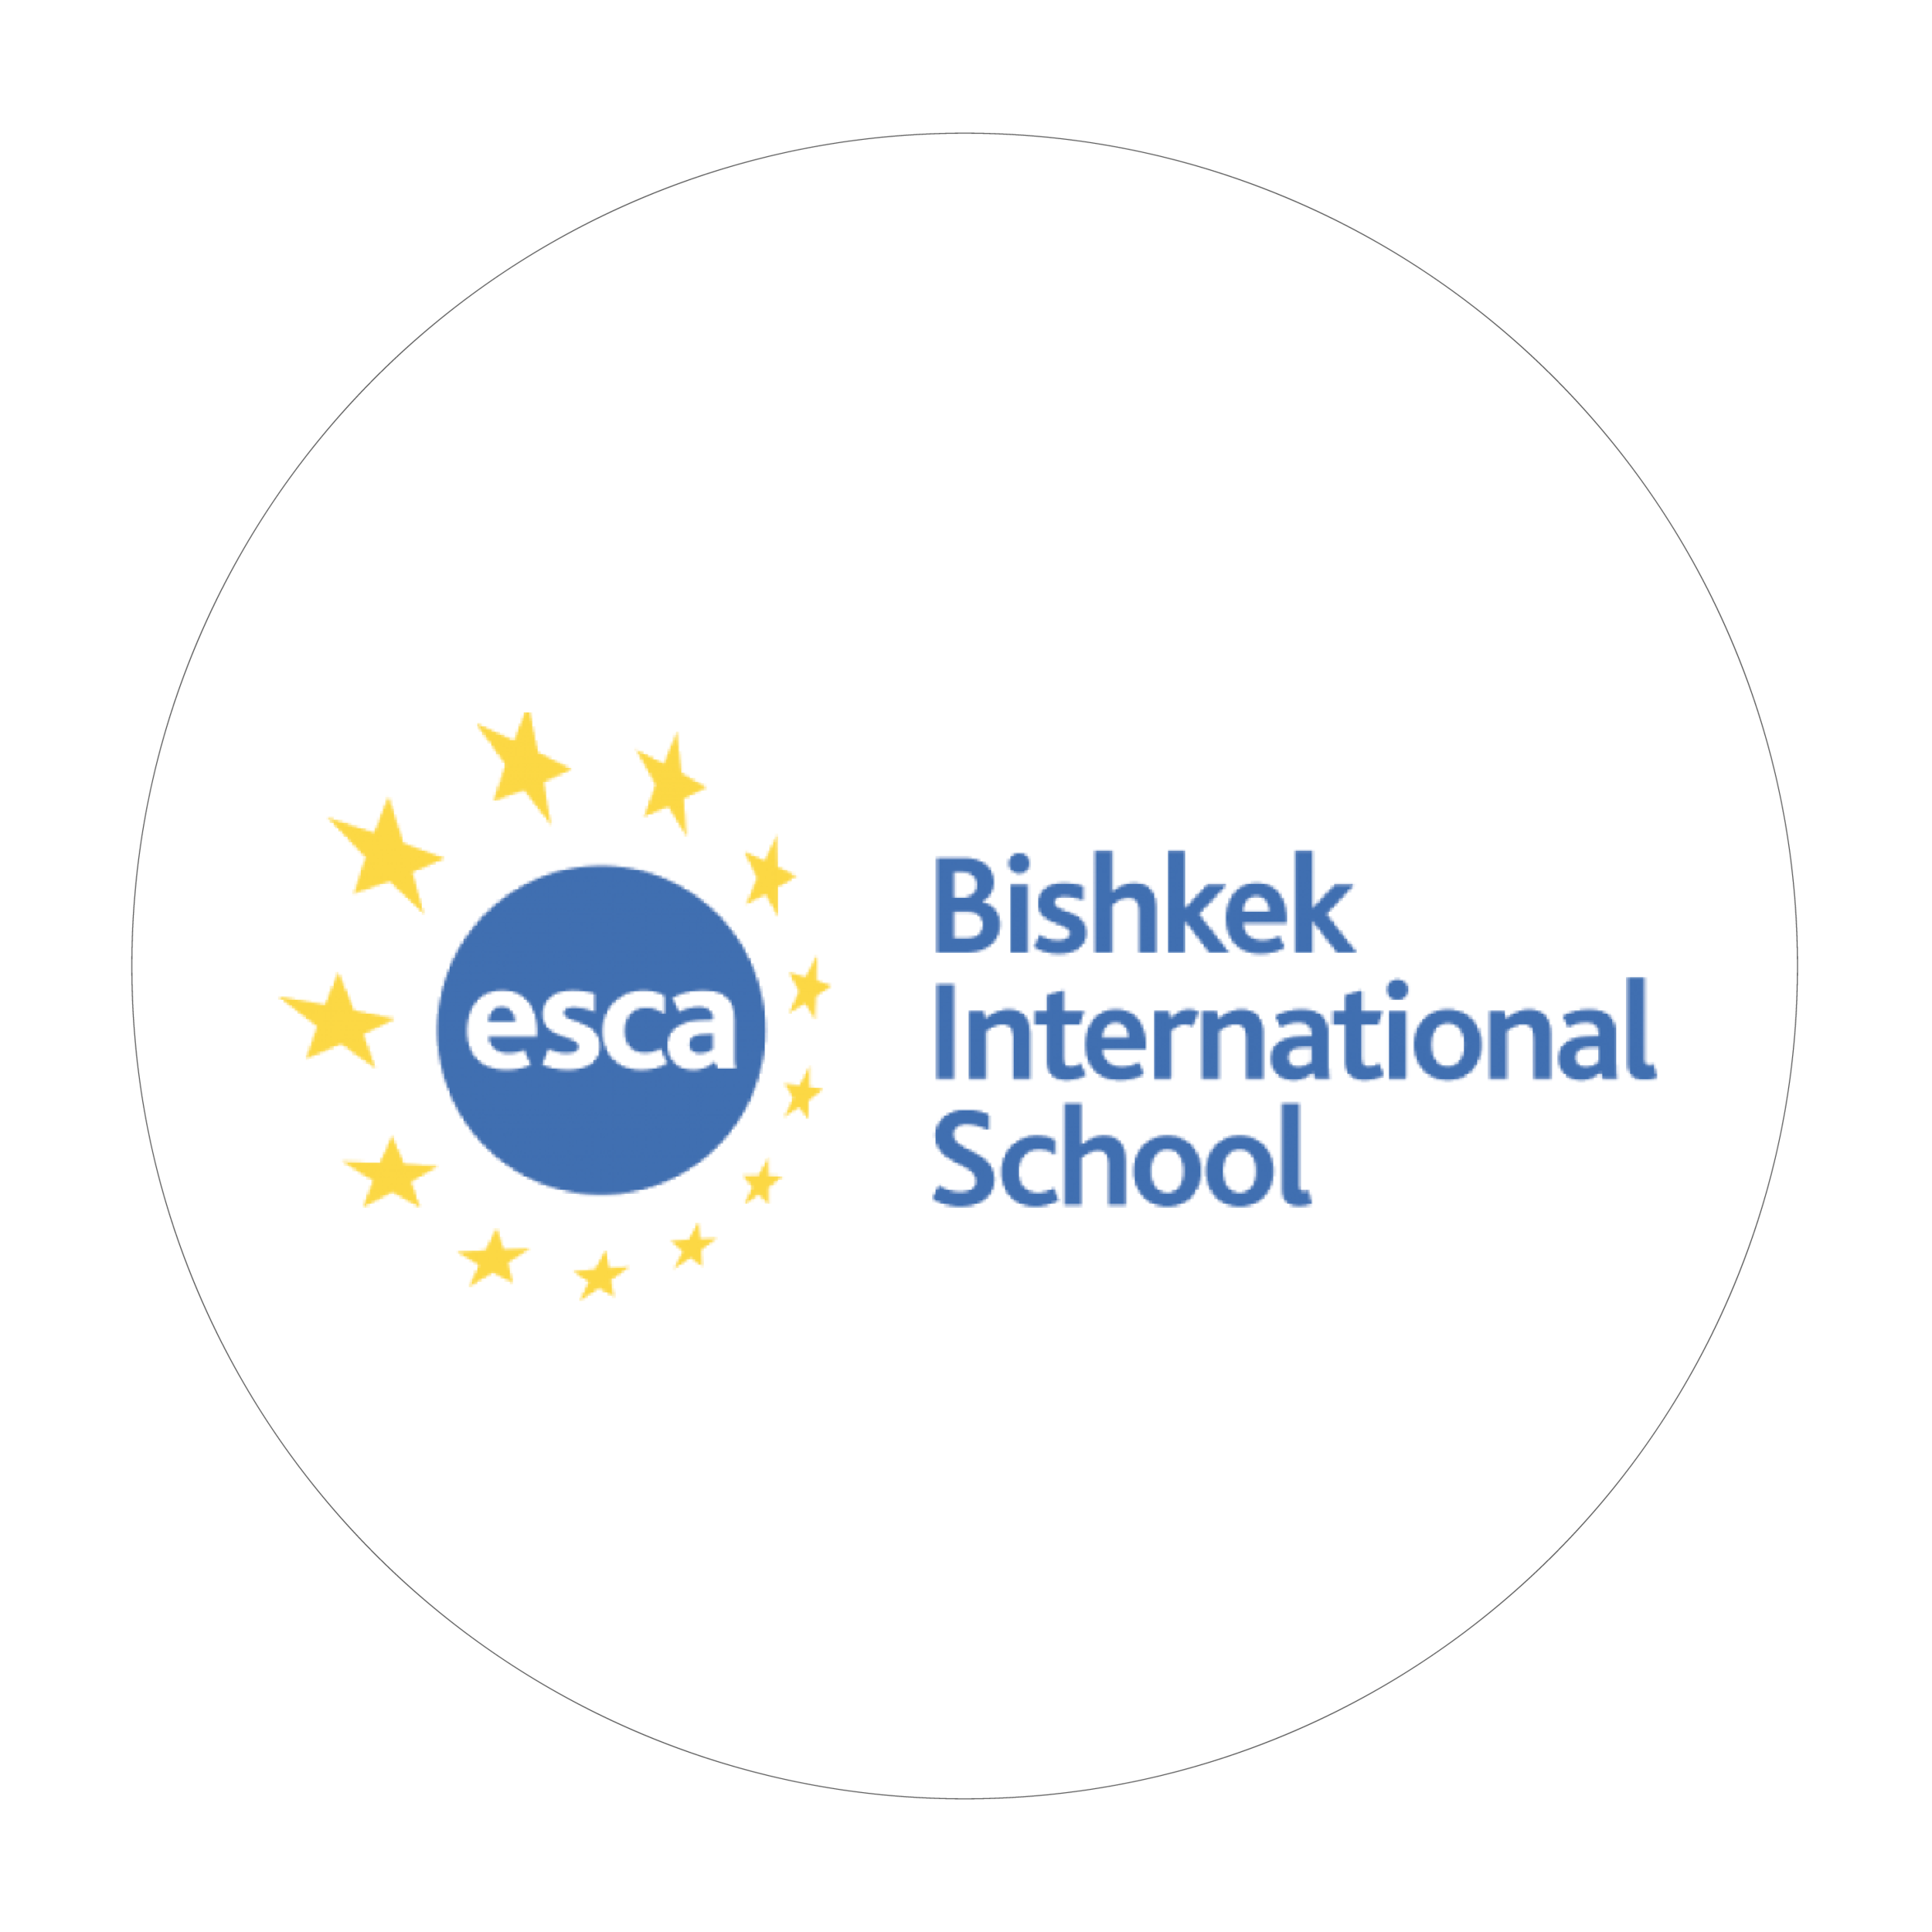 Bishkek International School